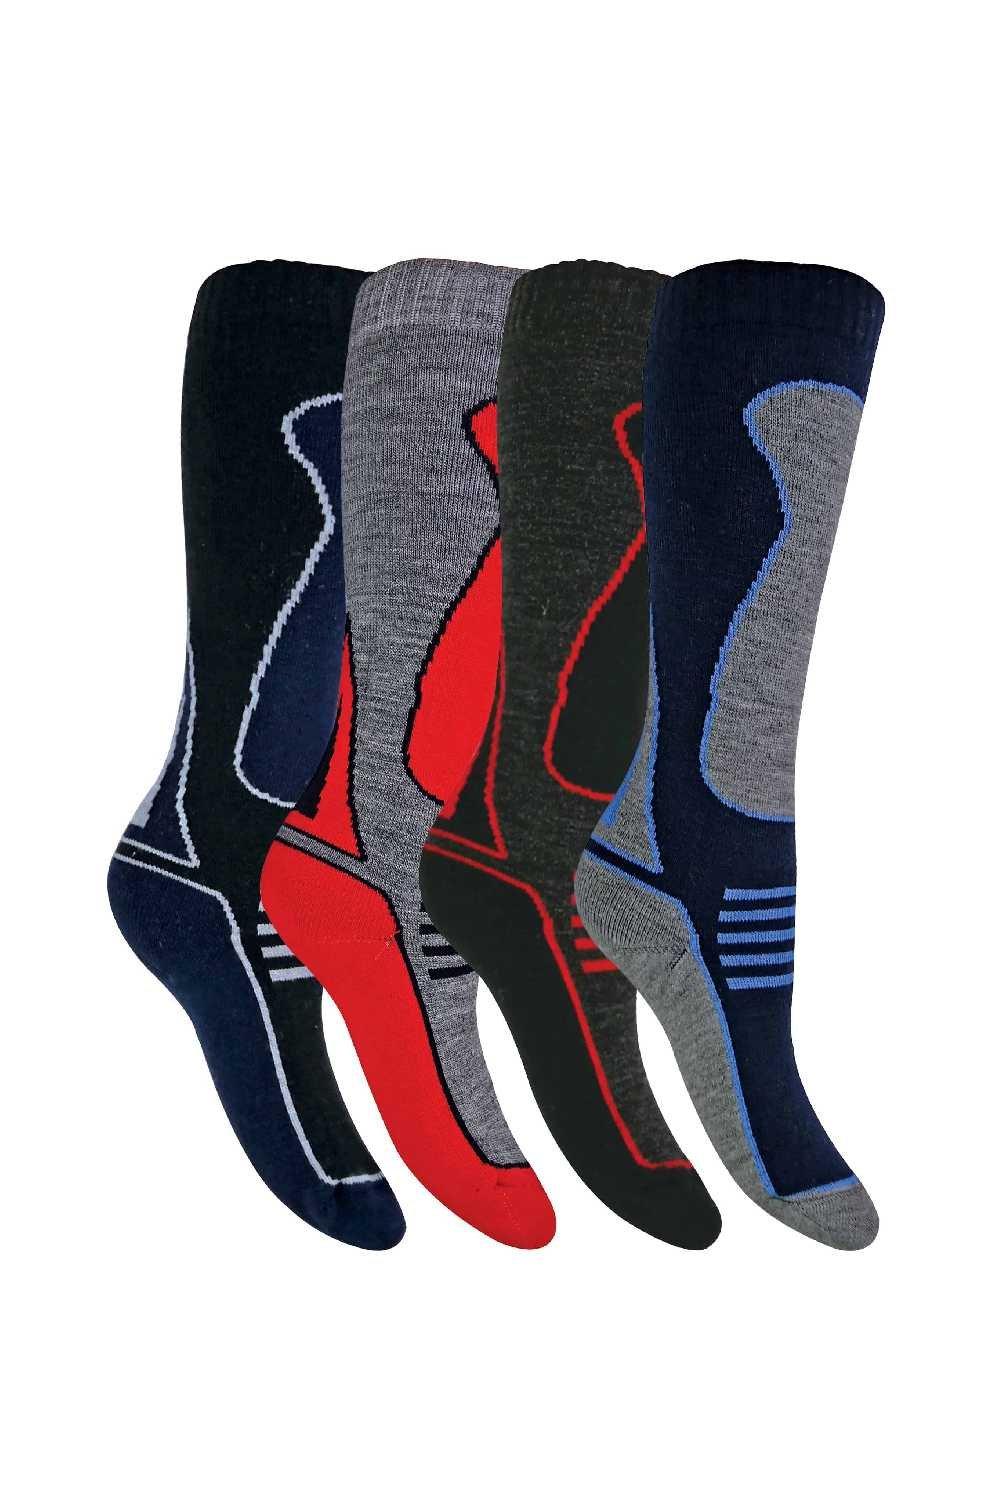 4 Pairs Long Knee High Wool Blend Ski Socks